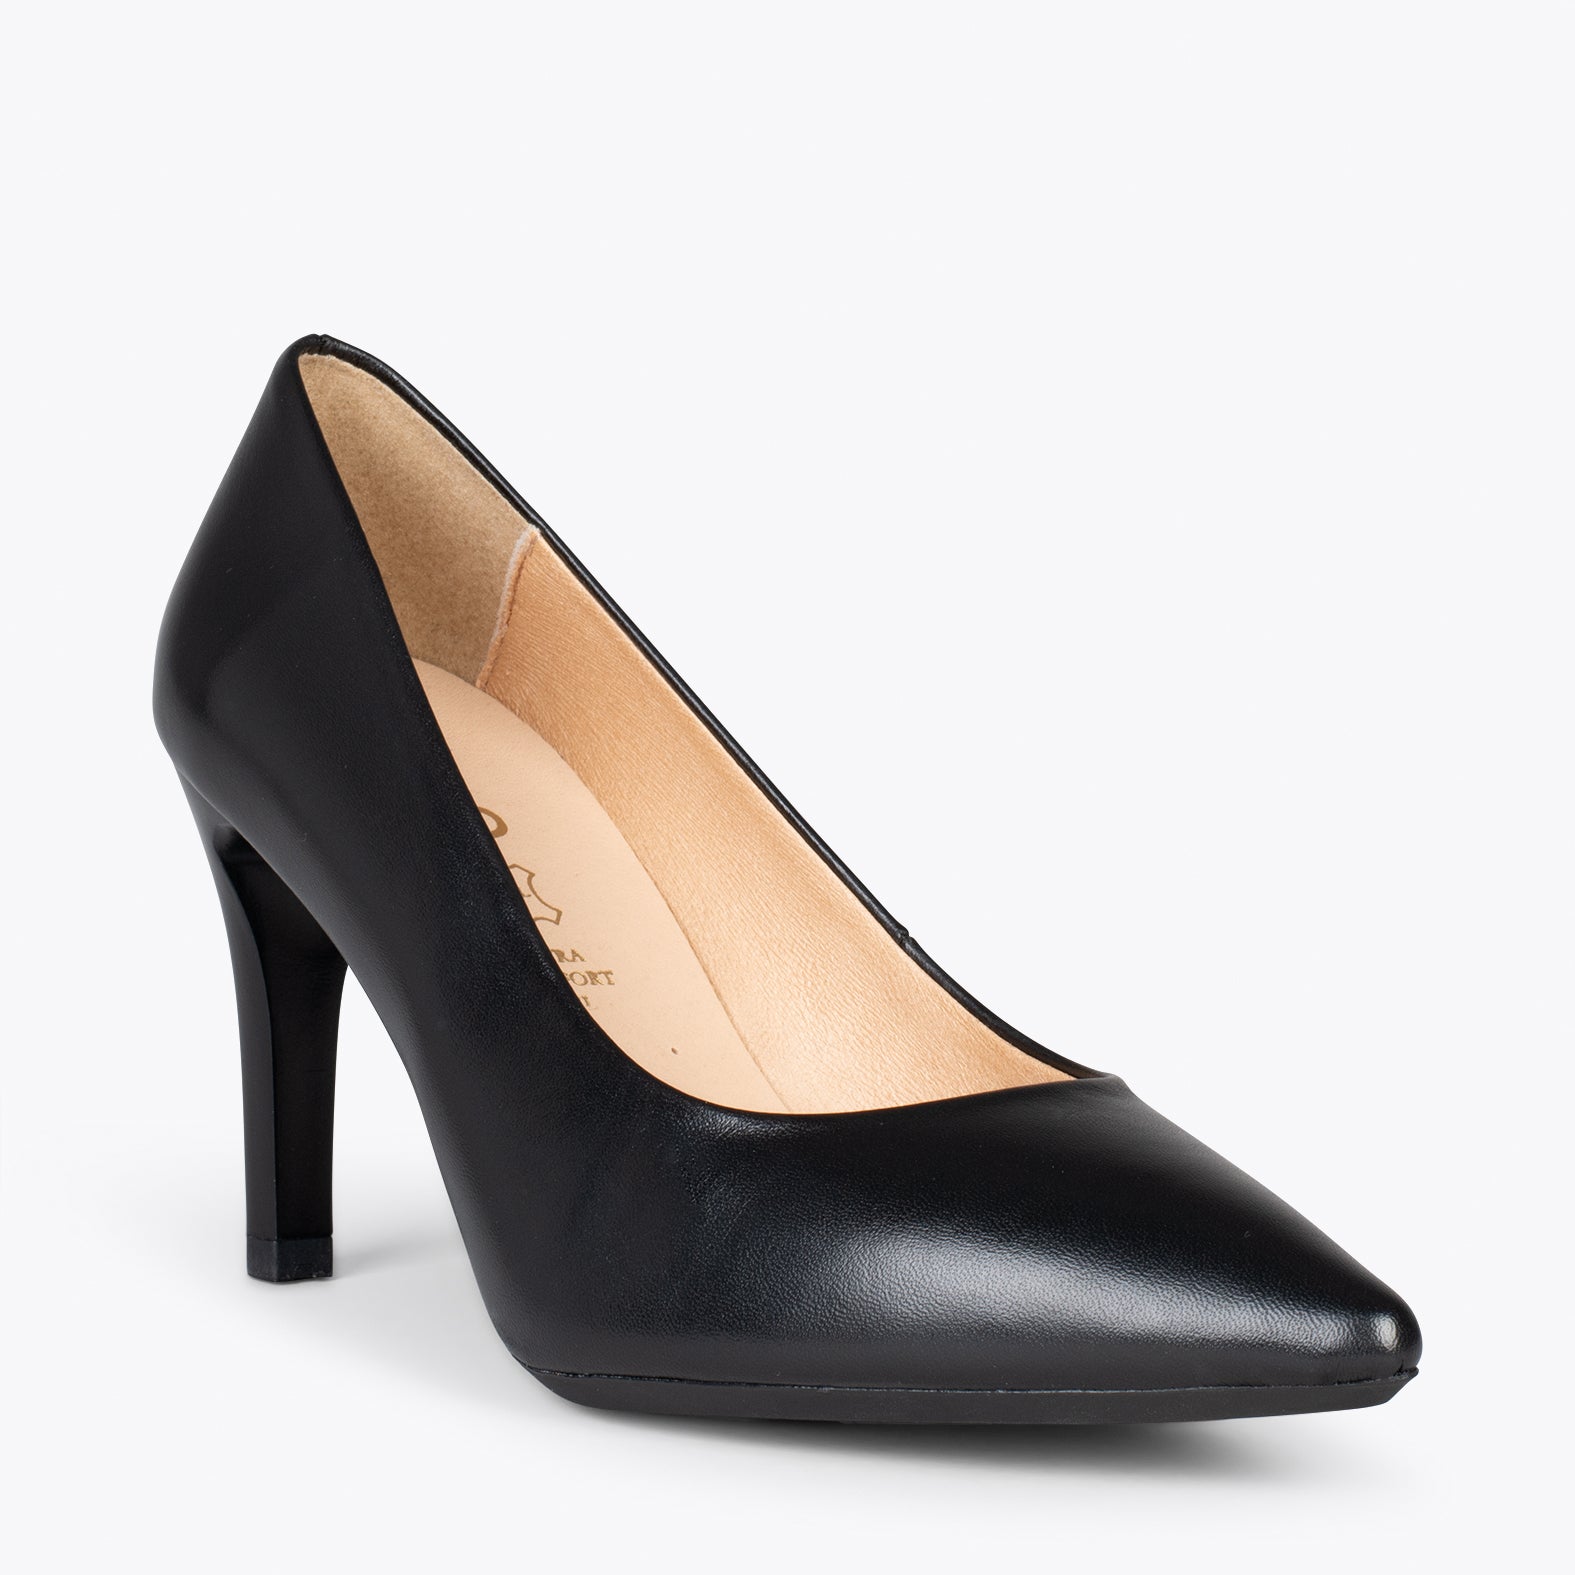 GLAM – BLACK elegant high heels